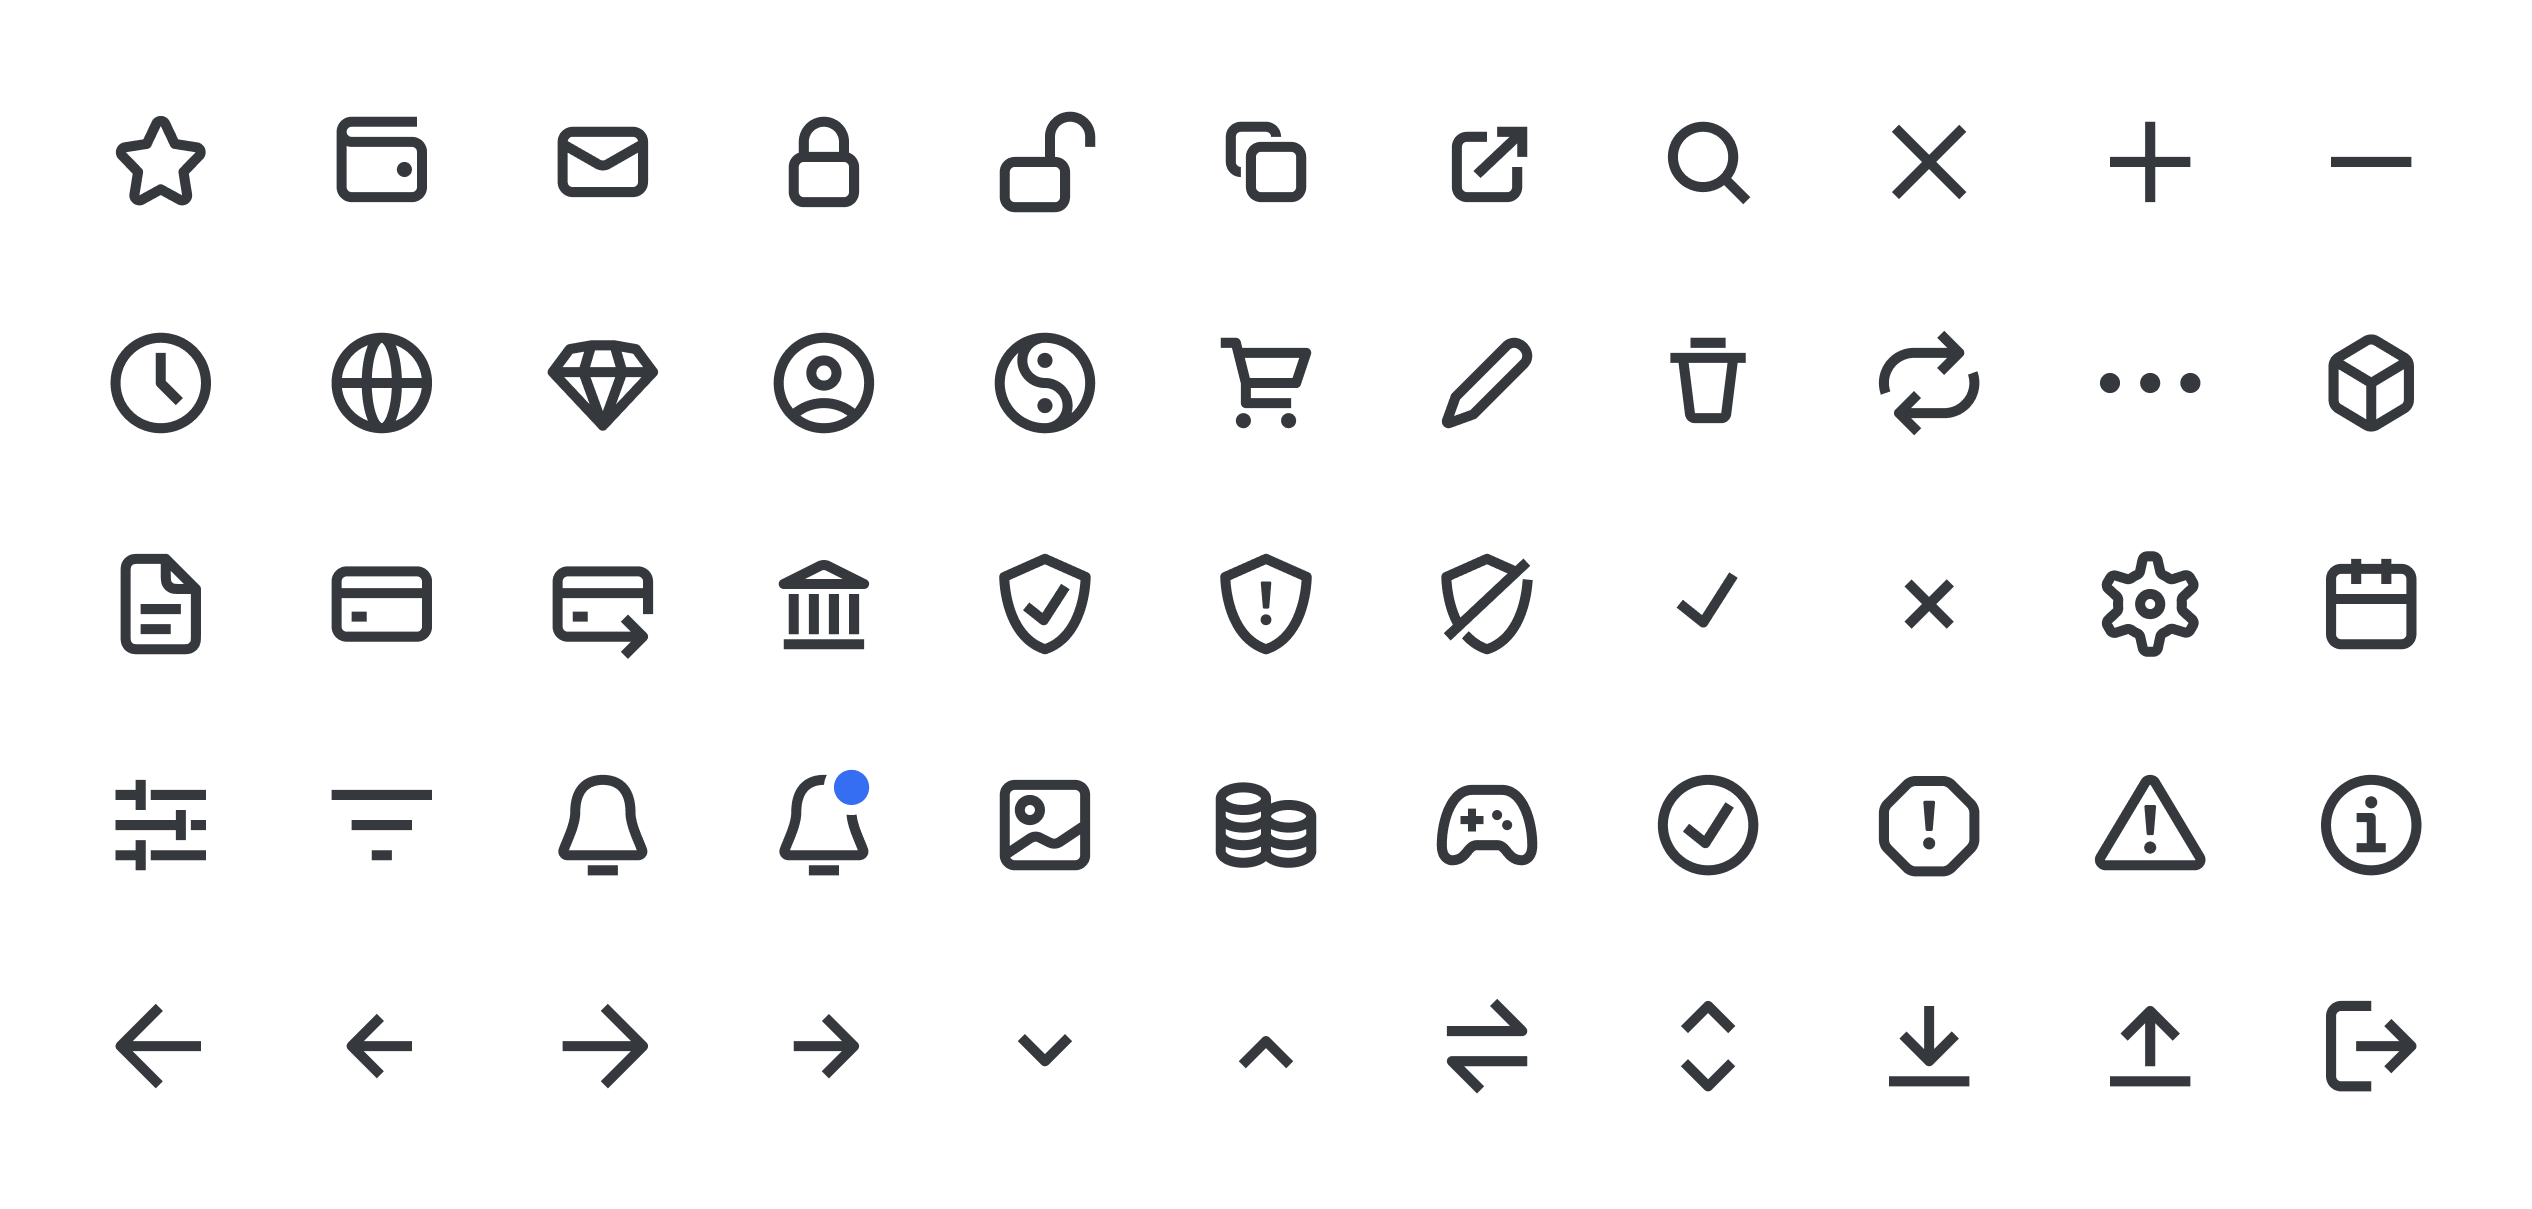 Ankr icons